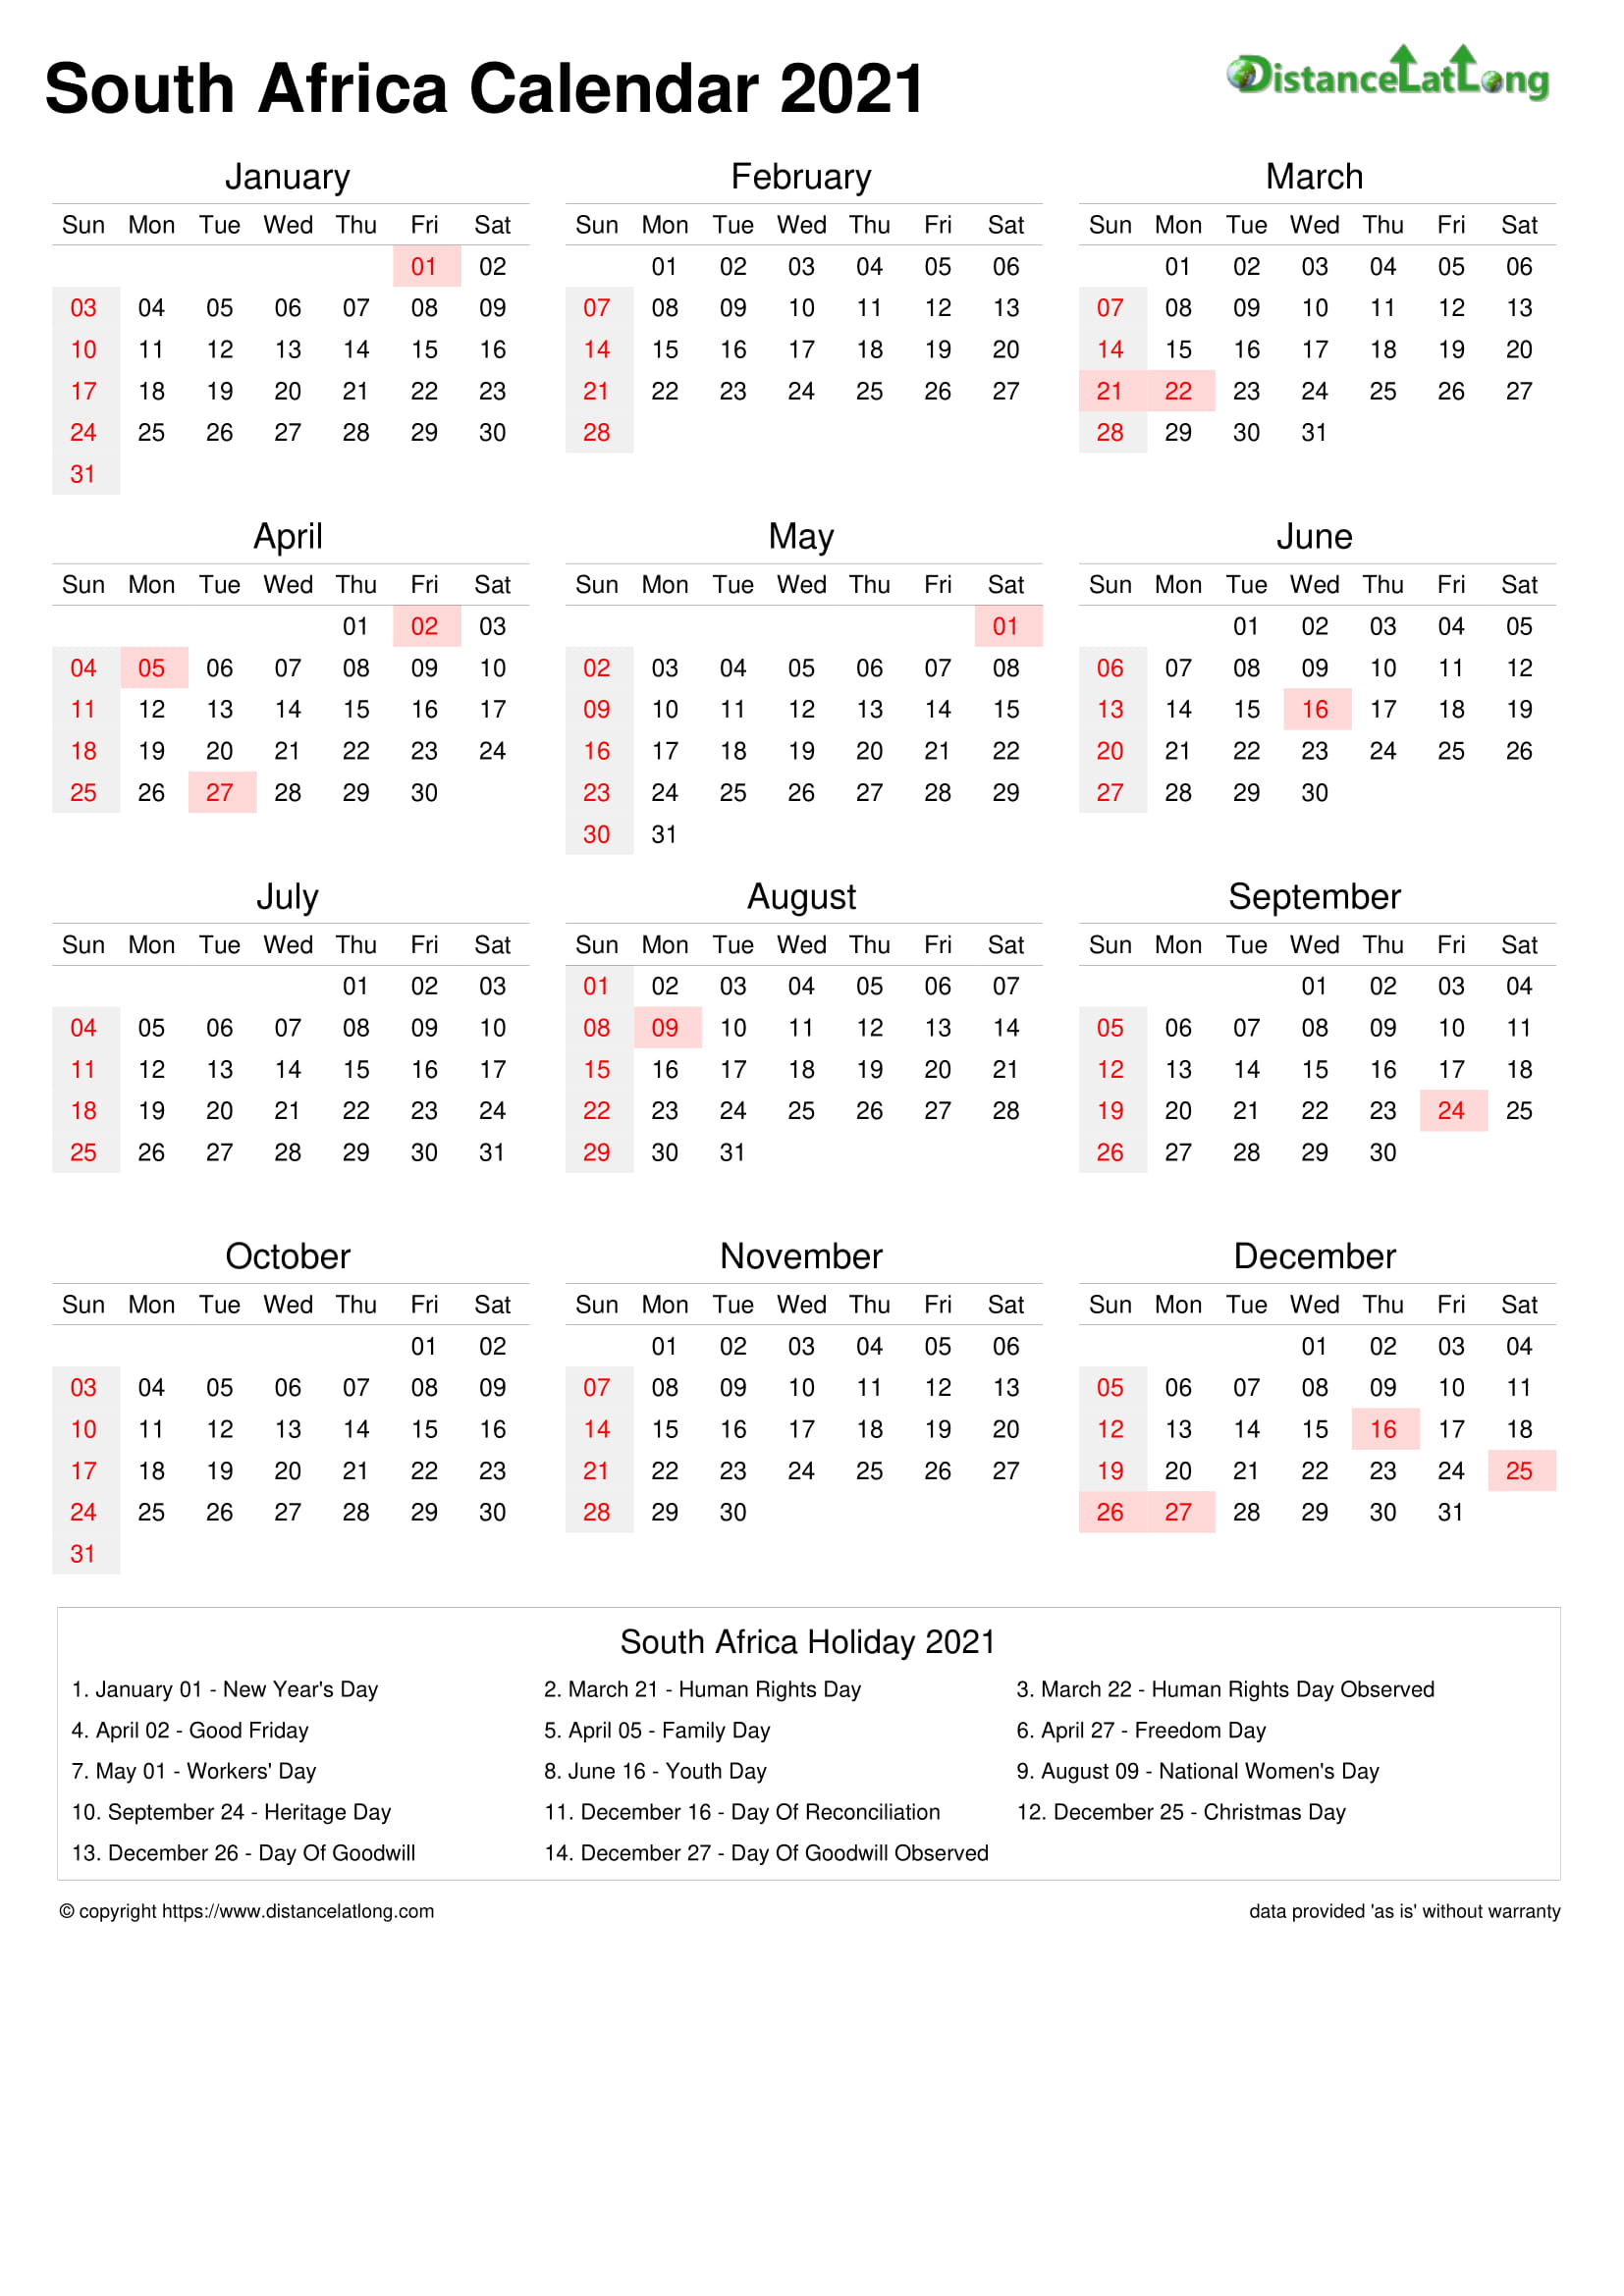 South African Public Holiday Calendar 2021 Aleferreirasp